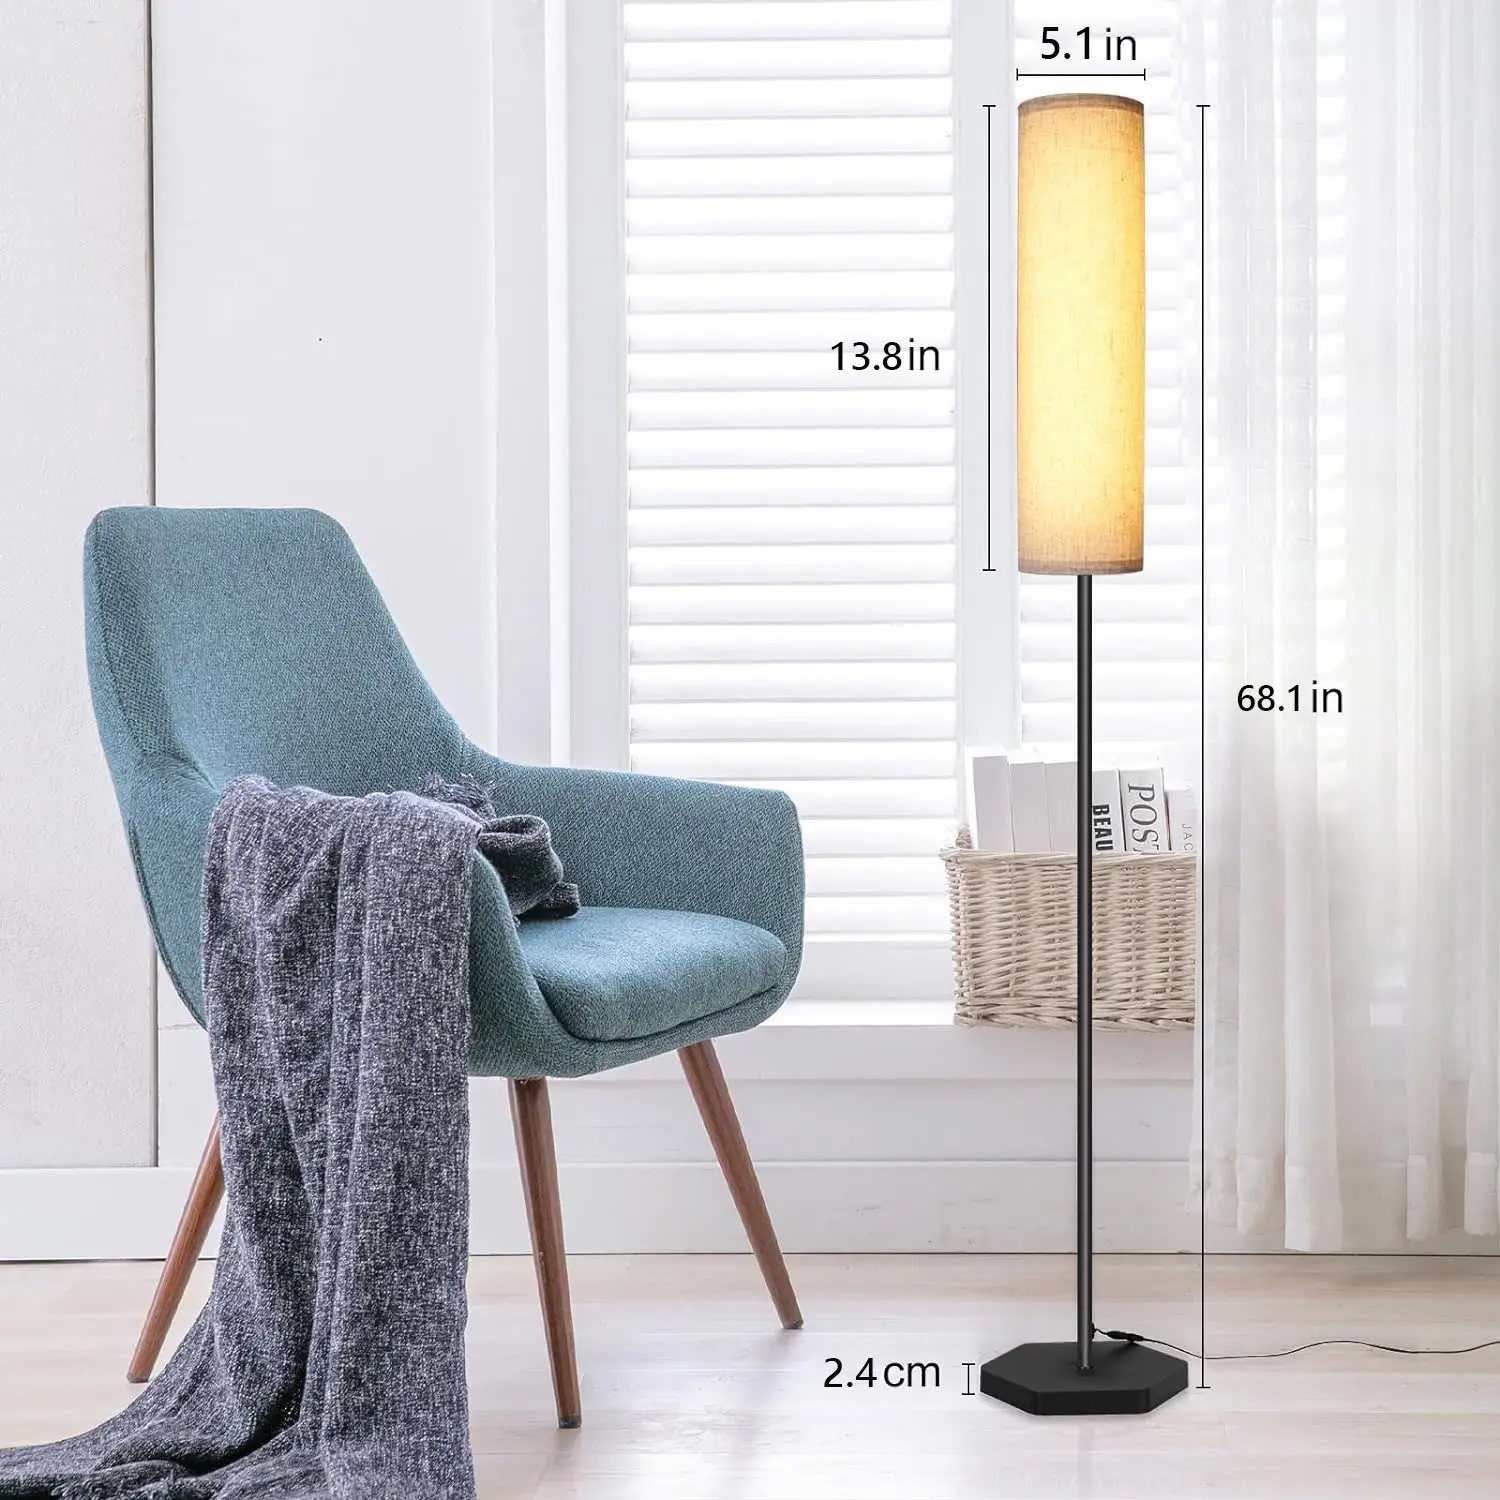 Living room Floor Lamp Modern Dimmable Reading Light nordic design fabric lampshade standing floor lamp for Bedroom